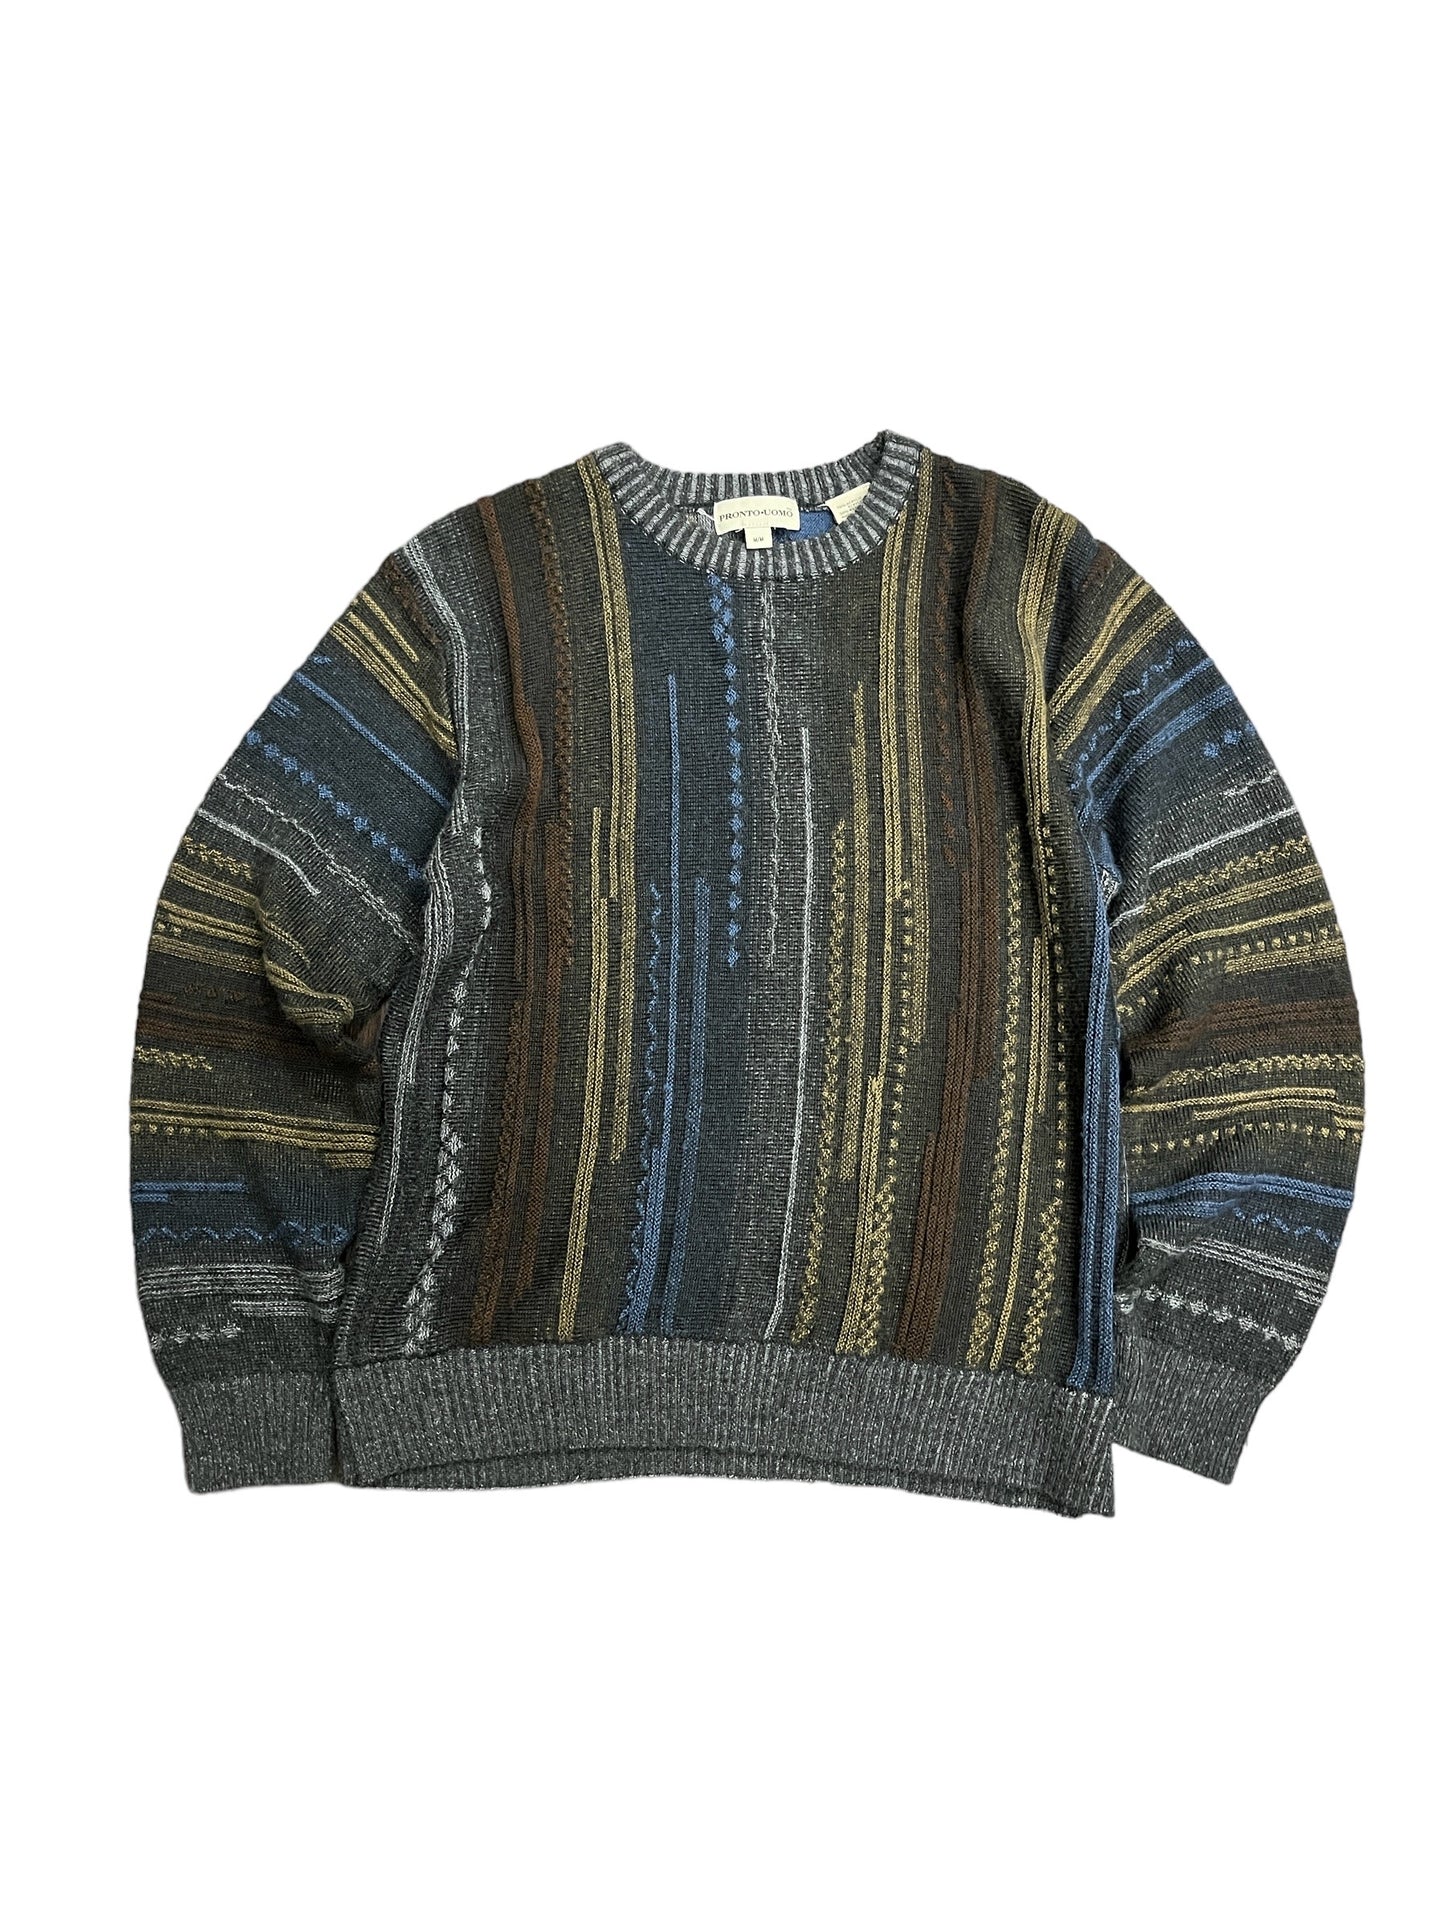 Vintage "Pronto Uomo" Knit Sweater